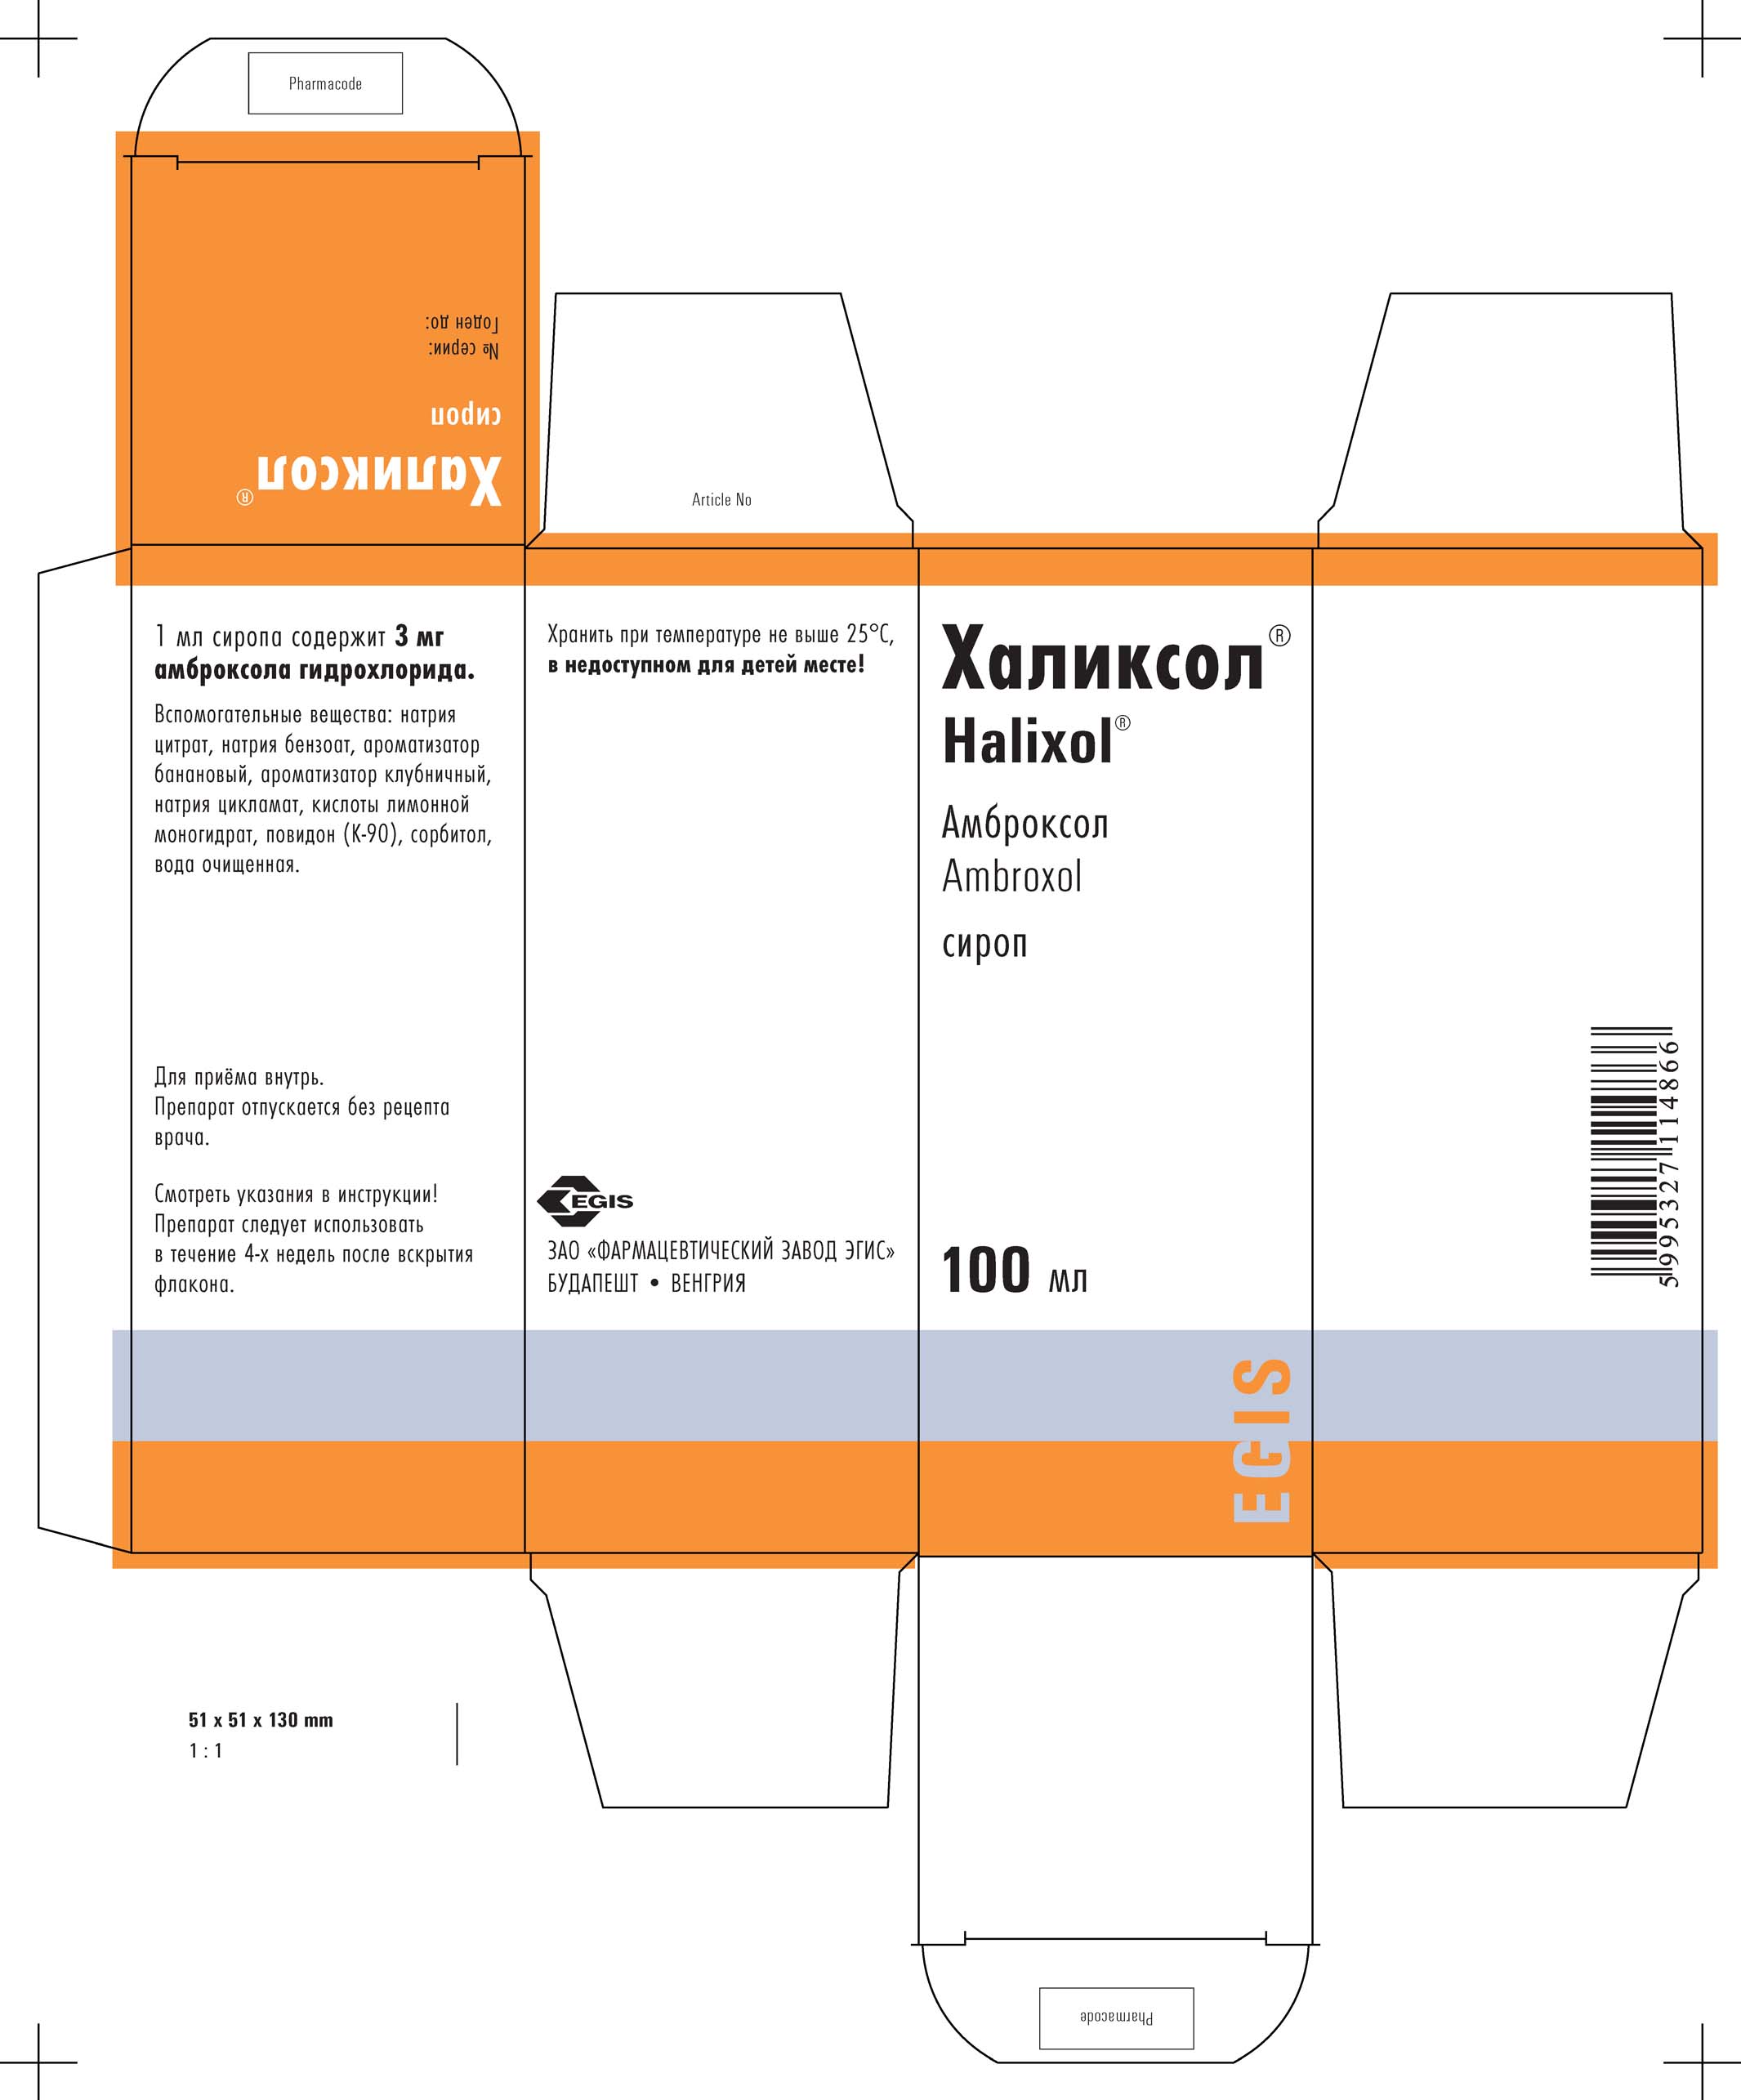 Халиксол сироп 300мг фл. 100мл - Муколитический препарат - Med911.am